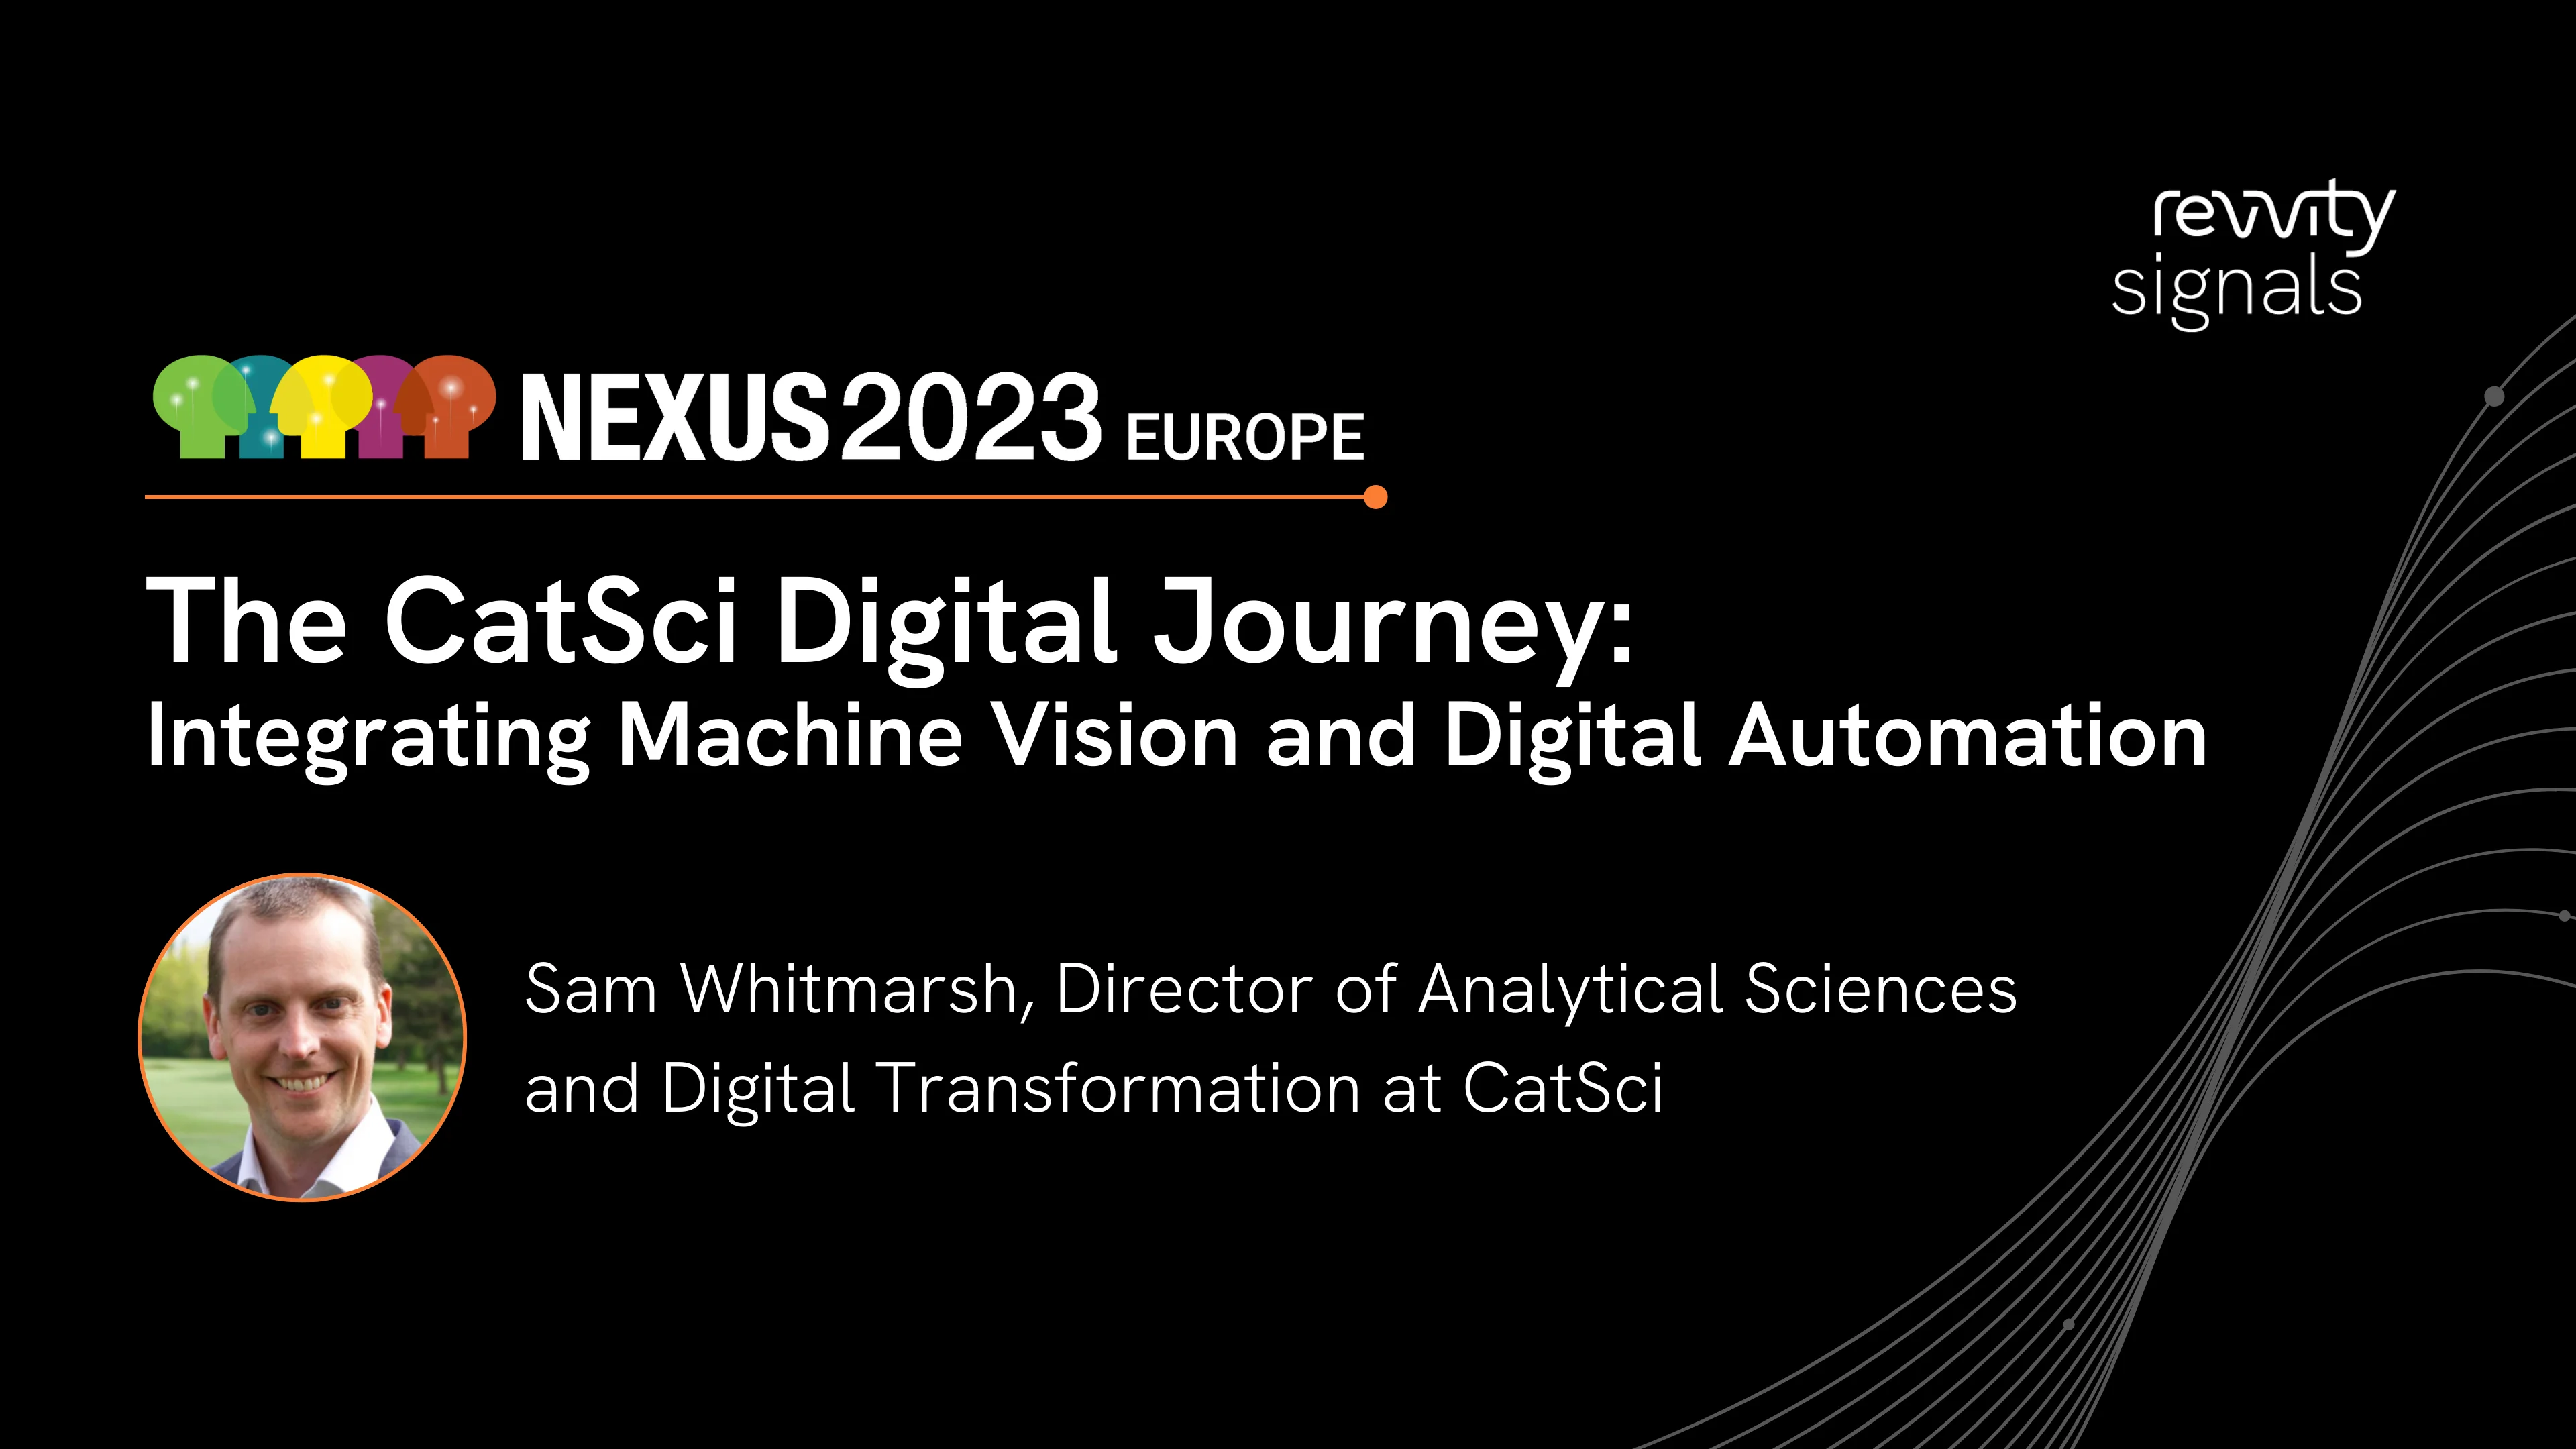 Watch Day 2, EU NEXUS 2023 - The CatSci Digital Journey: Integrating Machine Vision and Digital Automation on Vimeo.